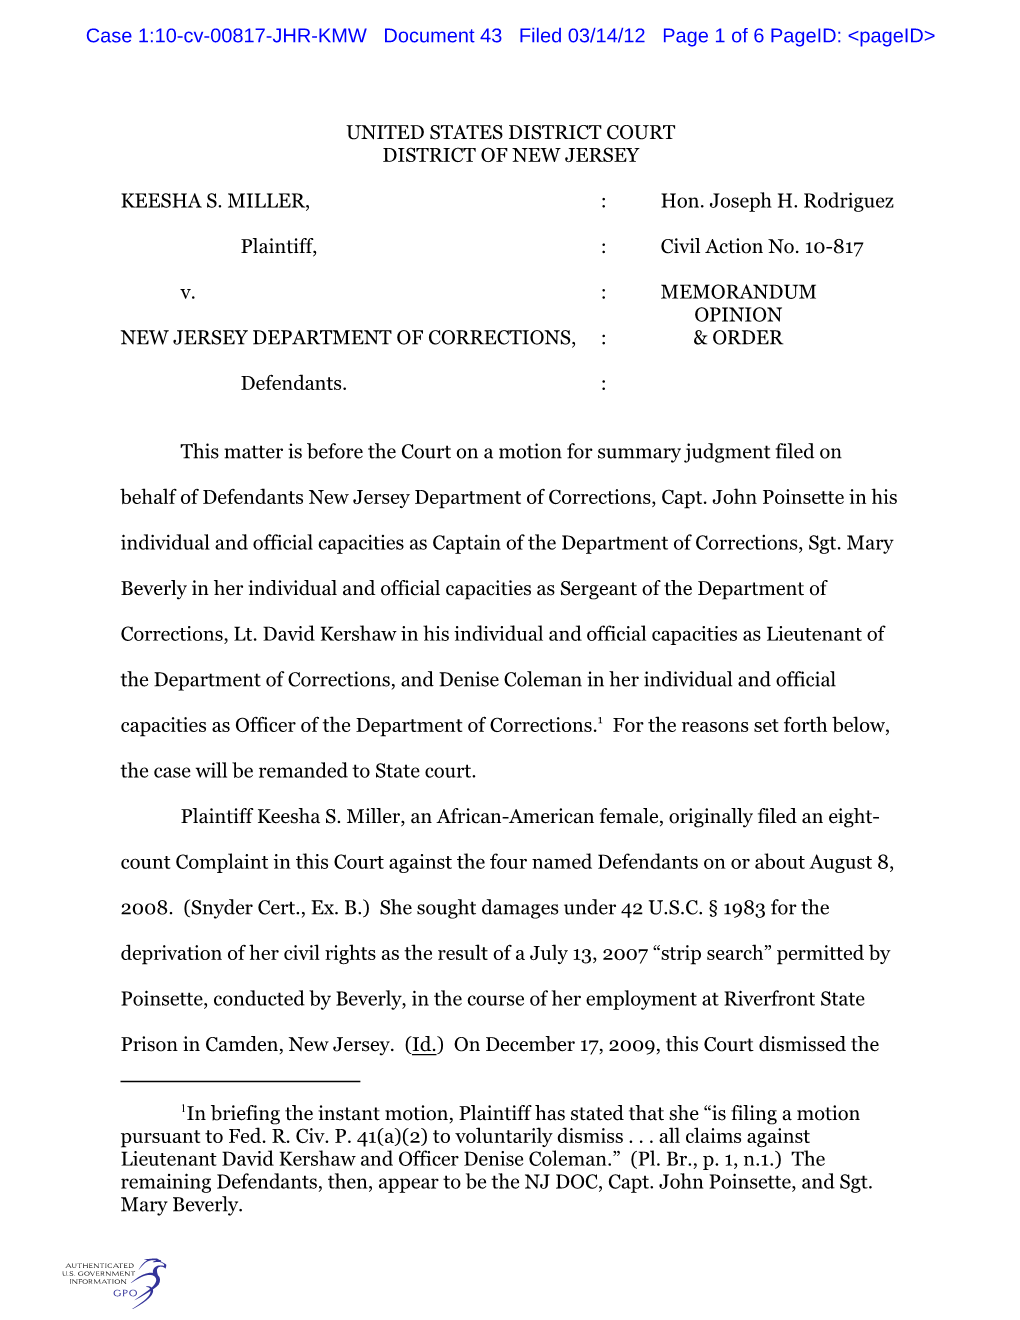 UNITED STATES DISTRICT COURT DISTRICT of NEW JERSEY KEESHA S. MILLER, : Hon. Joseph H. Rodriguez Plaintiff, : Civil Action No. 1